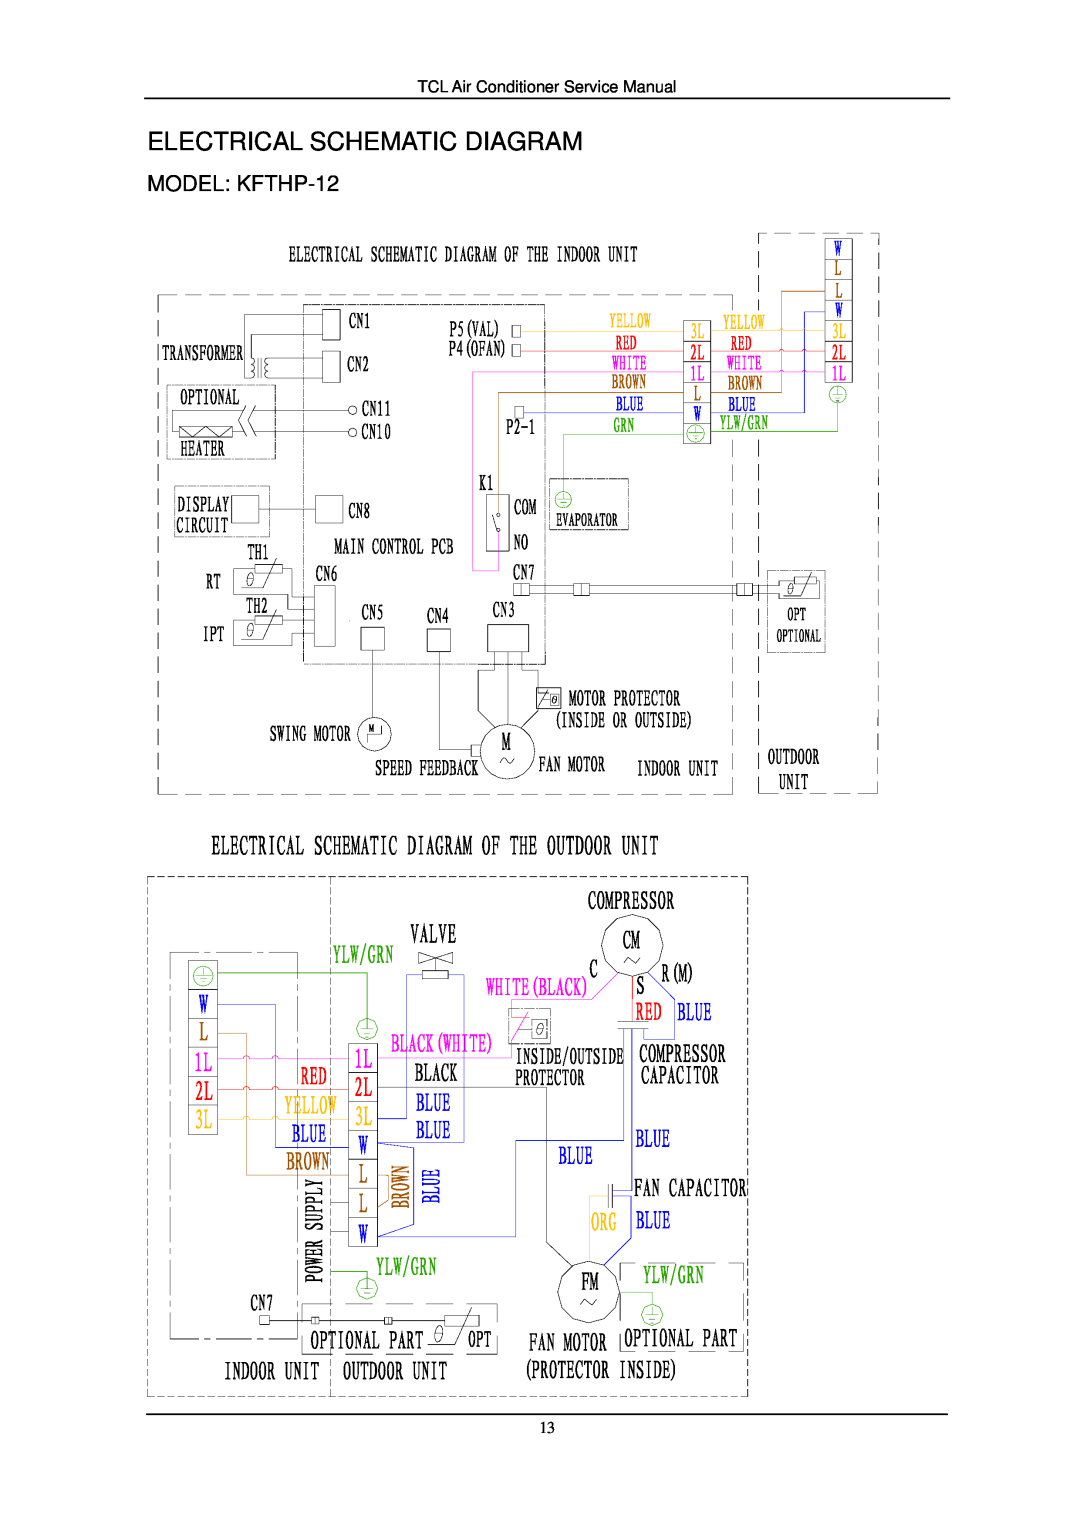 Soleus Air KFTHP-09, KFTHP-18, KFTHP-24 service manual Electrical Schematic Diagram, MODEL KFTHP-12 